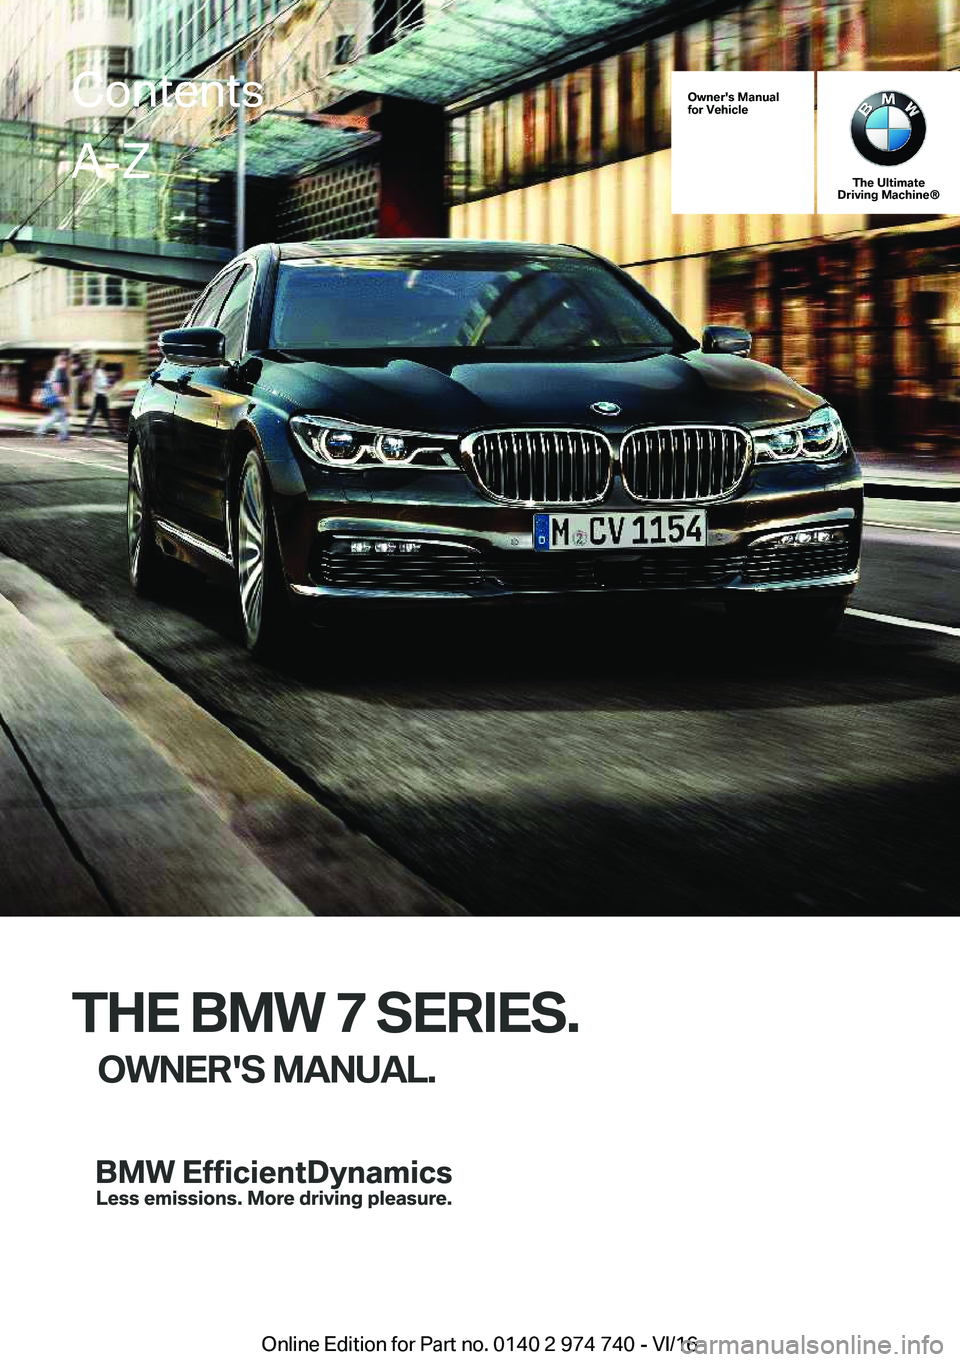 BMW 7 SERIES 2017  Owners Manual �O�w�n�e�r�'�s��M�a�n�u�a�l
�f�o�r��V�e�h�i�c�l�e
�T�h�e��U�l�t�i�m�a�t�e
�D�r�i�v�i�n�g��M�a�c�h�i�n�e�n
�T�H�E��B�M�W��7��S�E�R�I�E�S�.
�O�W�N�E�R�'�S��M�A�N�U�A�L�.
�C�o�n�t�e�n�t�s